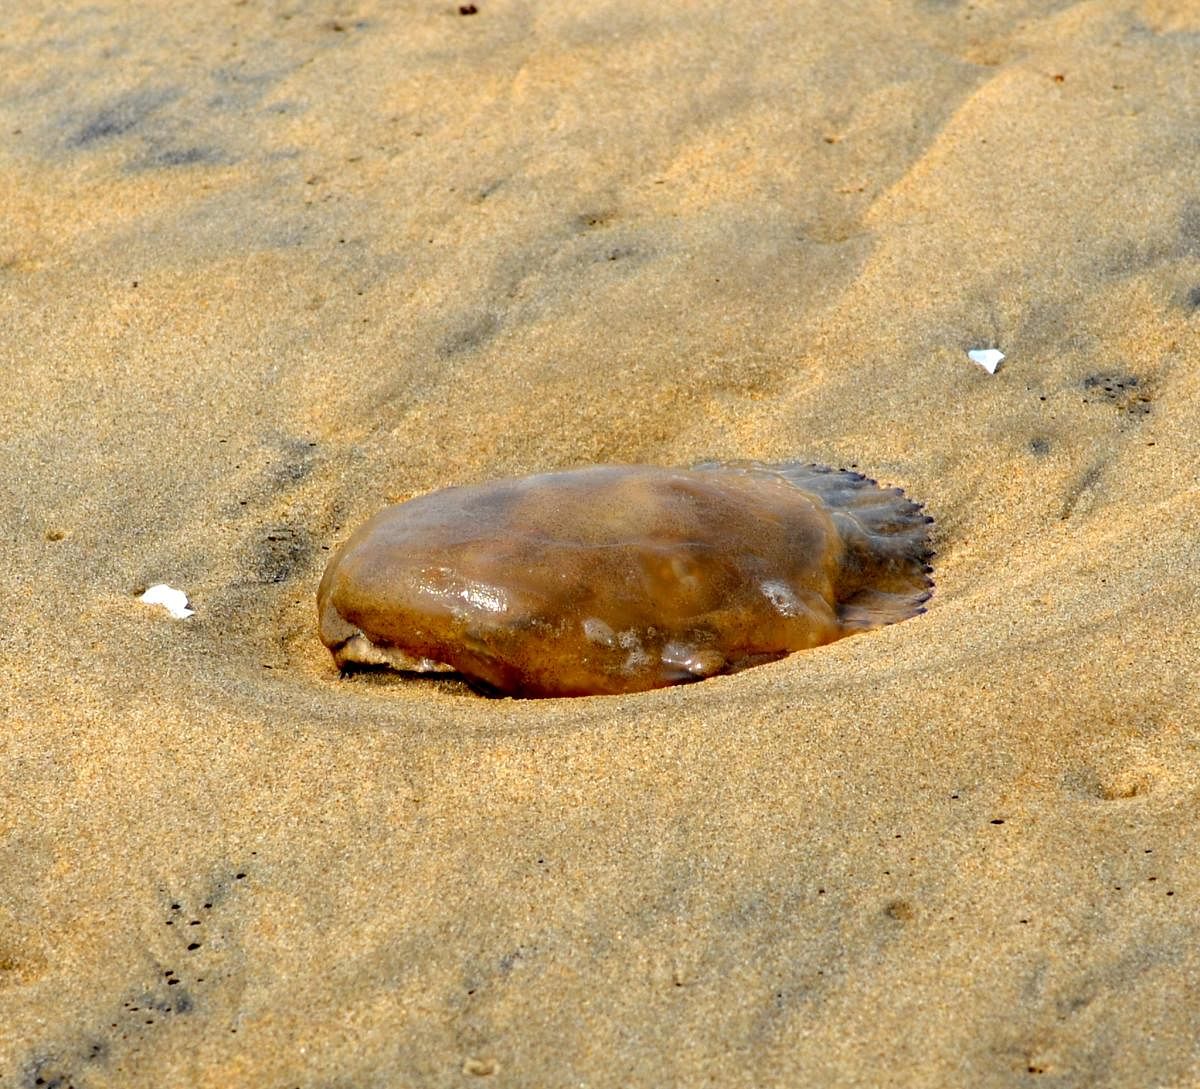 Jellyfish scare on Tagore beach in Karwar